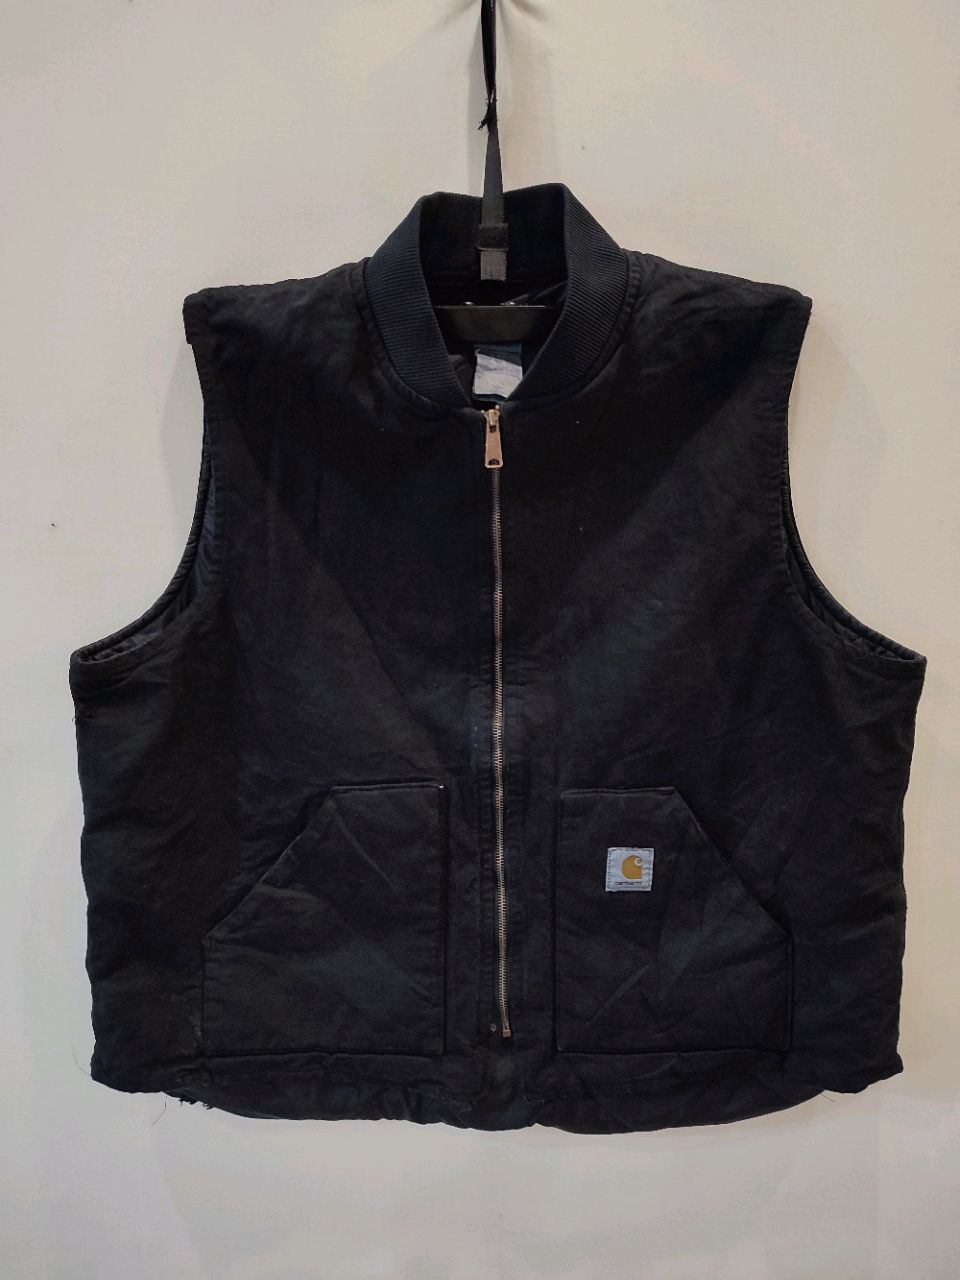 Carhartt Black Rework Vests - 25 pieces